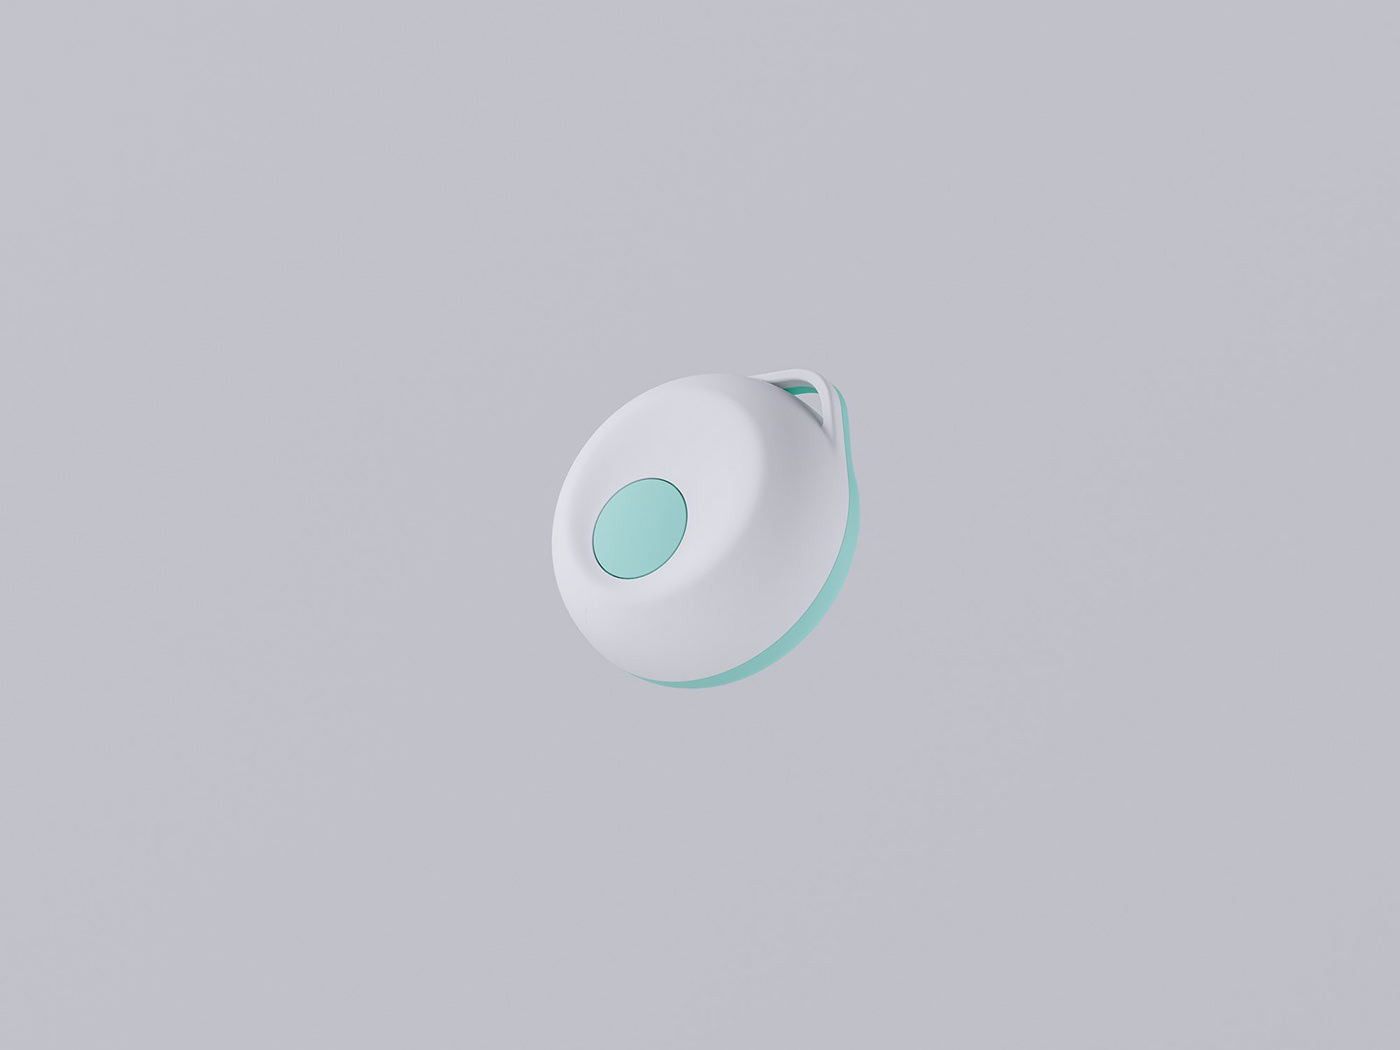 Smart design minimal simple objet idea Accessory device inspiration living